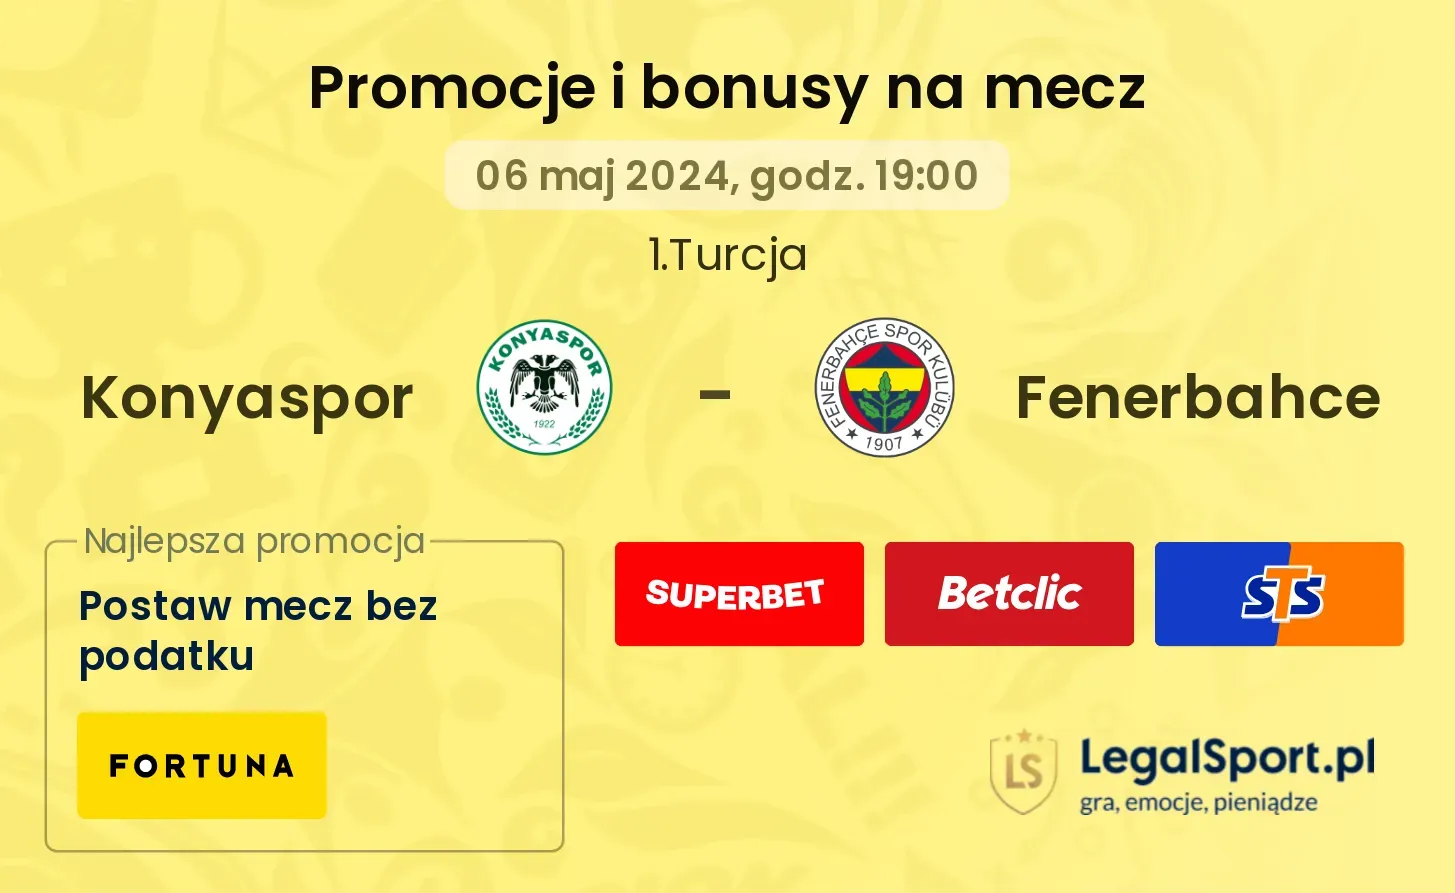 Konyaspor - Fenerbahce promocje bonusy na mecz